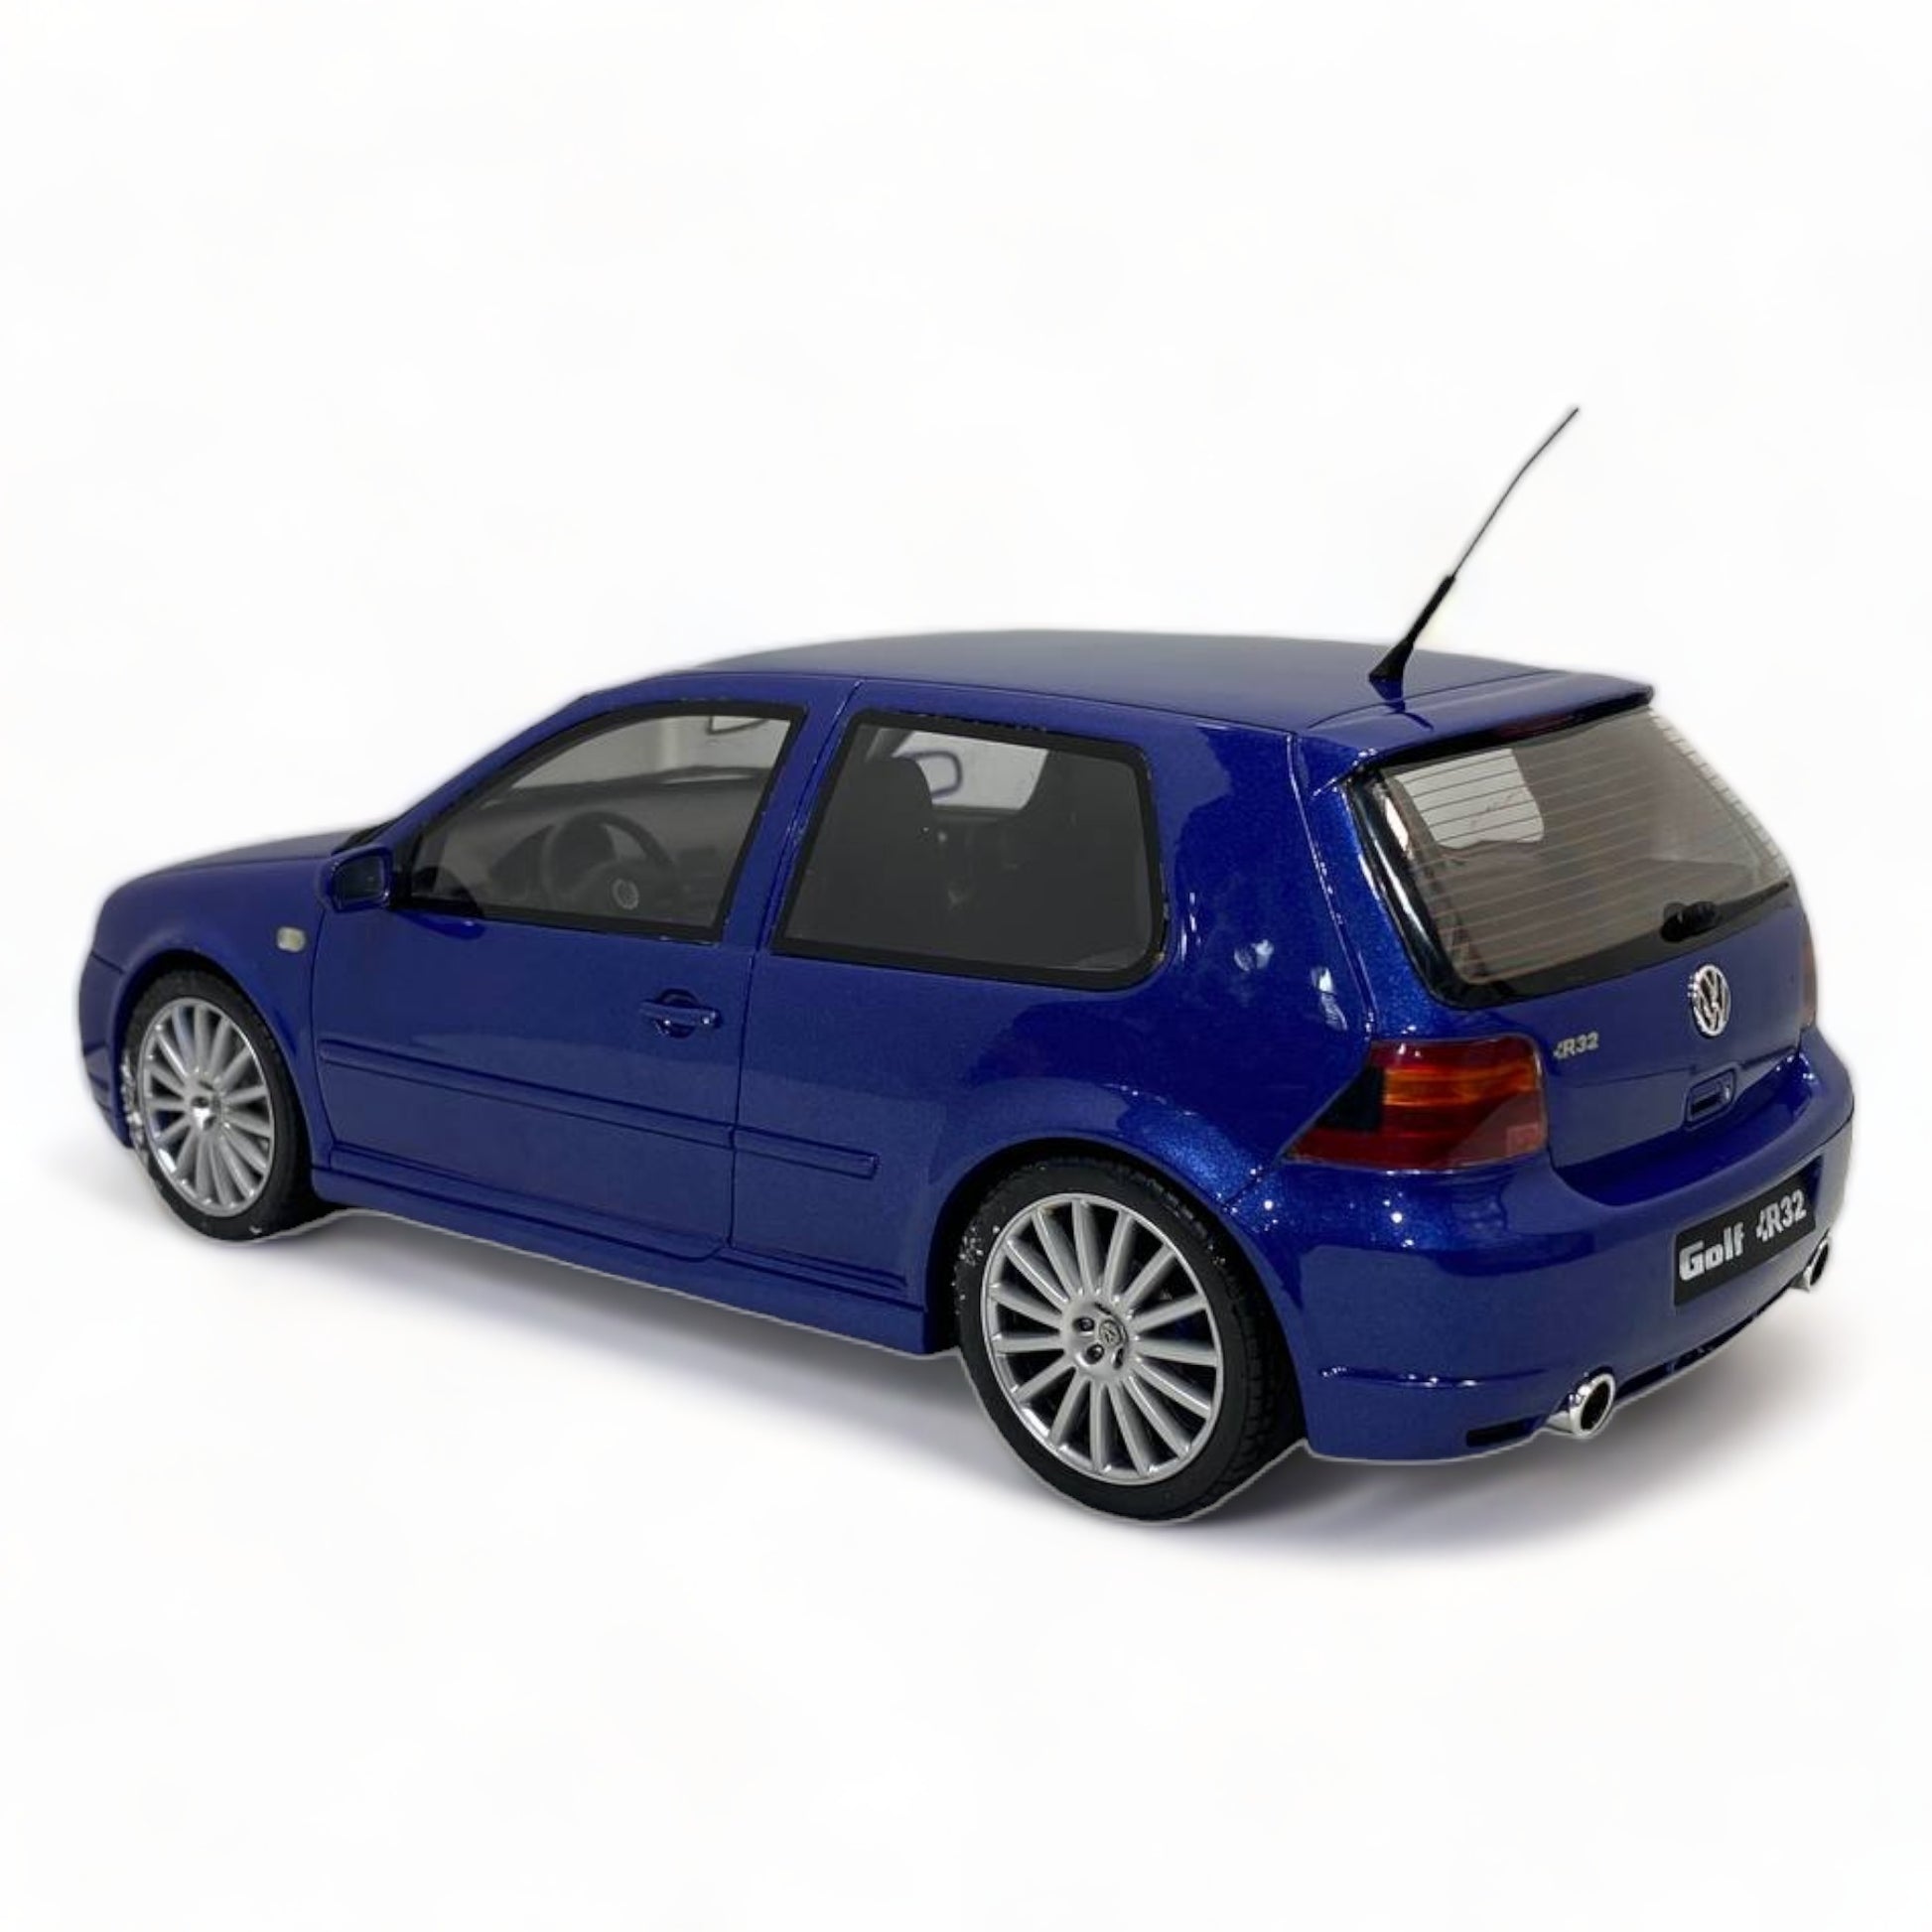 1/18 Resin OTTO Volkswagen Golf R32 - Blue Miniature Car|Sold in Dturman.com Dubai UAE.